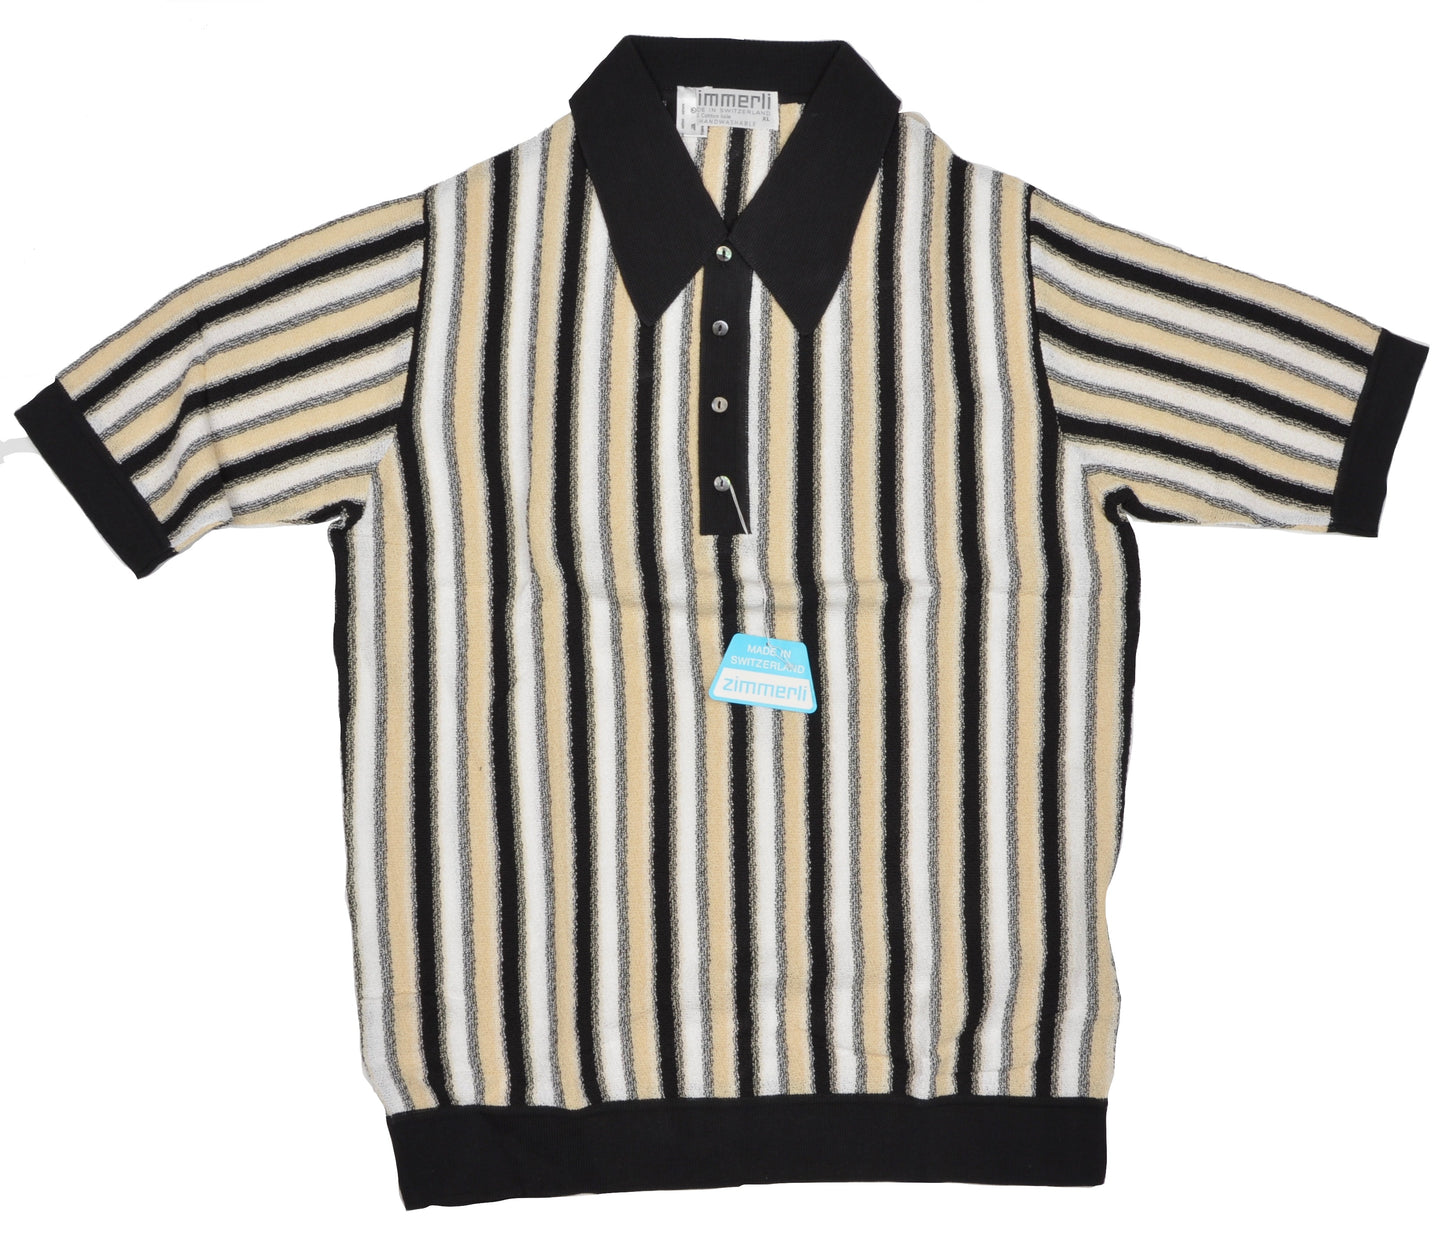 Knit Striped Polo Shirt by Zimmerli Size XL - Cotton Lisle Black, White & Beige